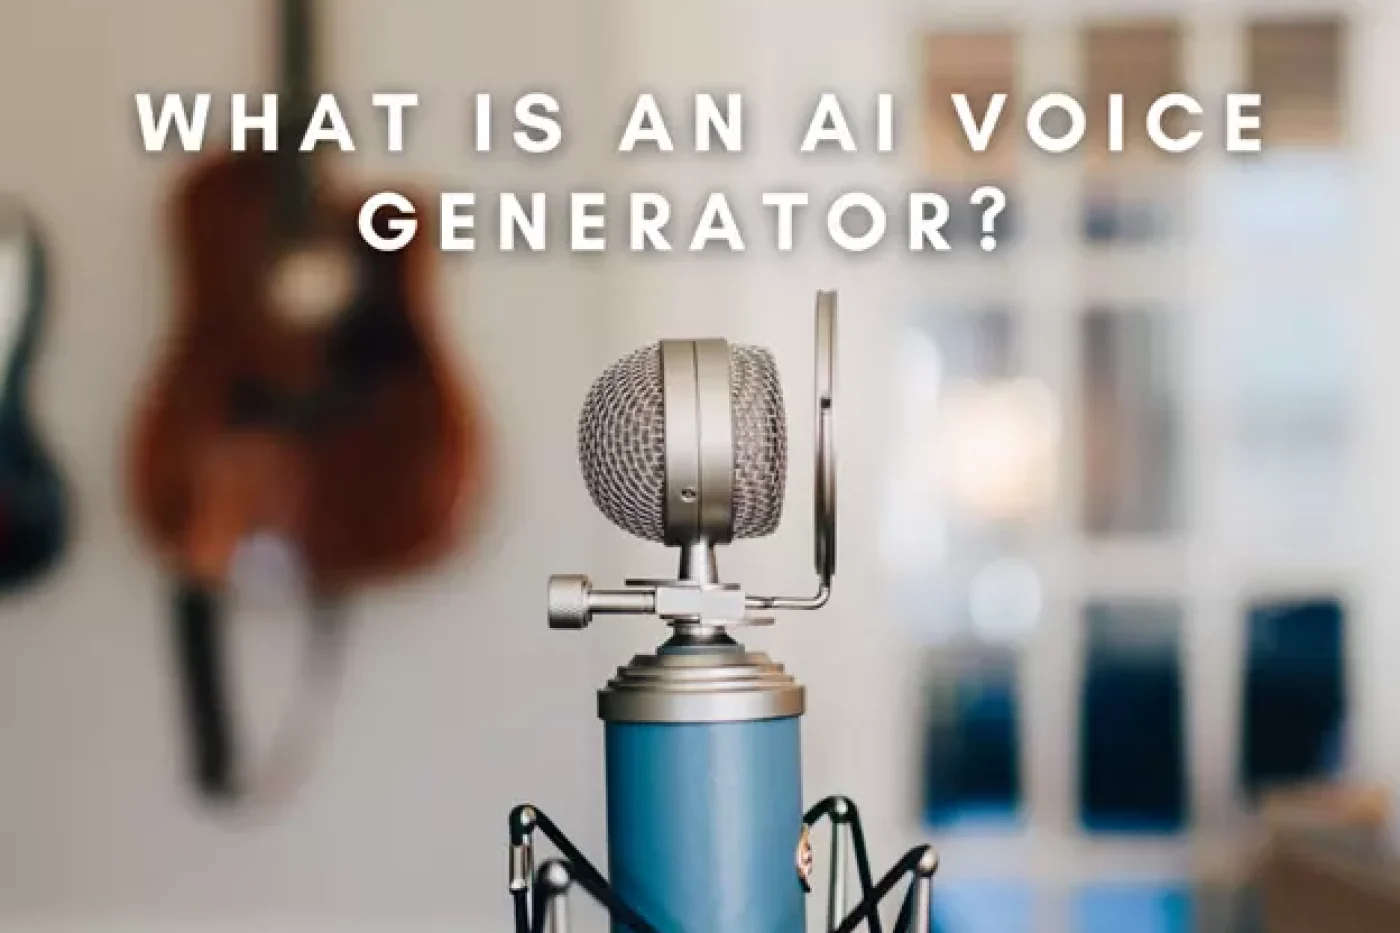 AI voice generator